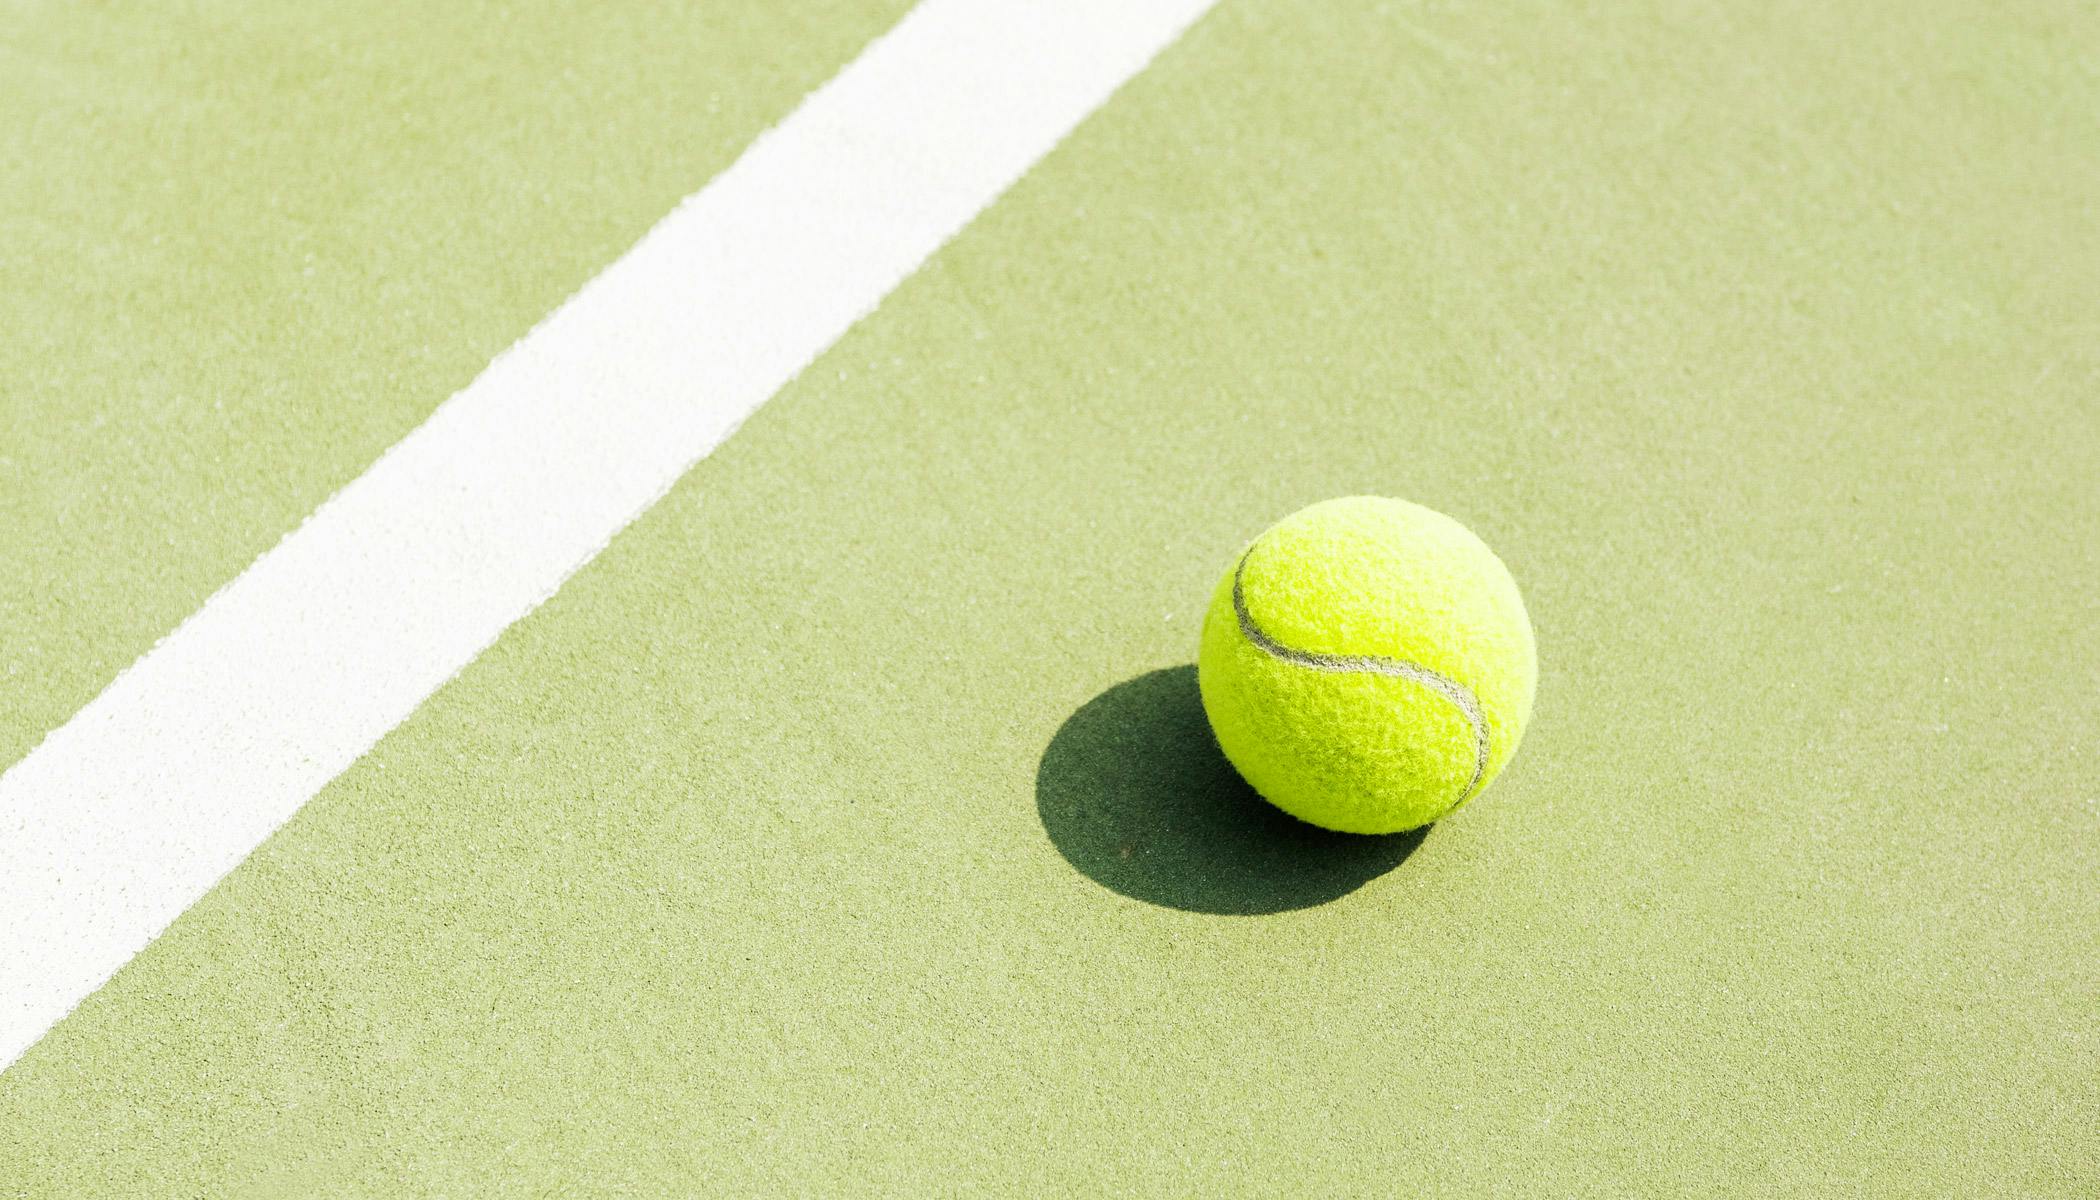 Tennis ball on hardcourt surface; Photo by Alan Macías